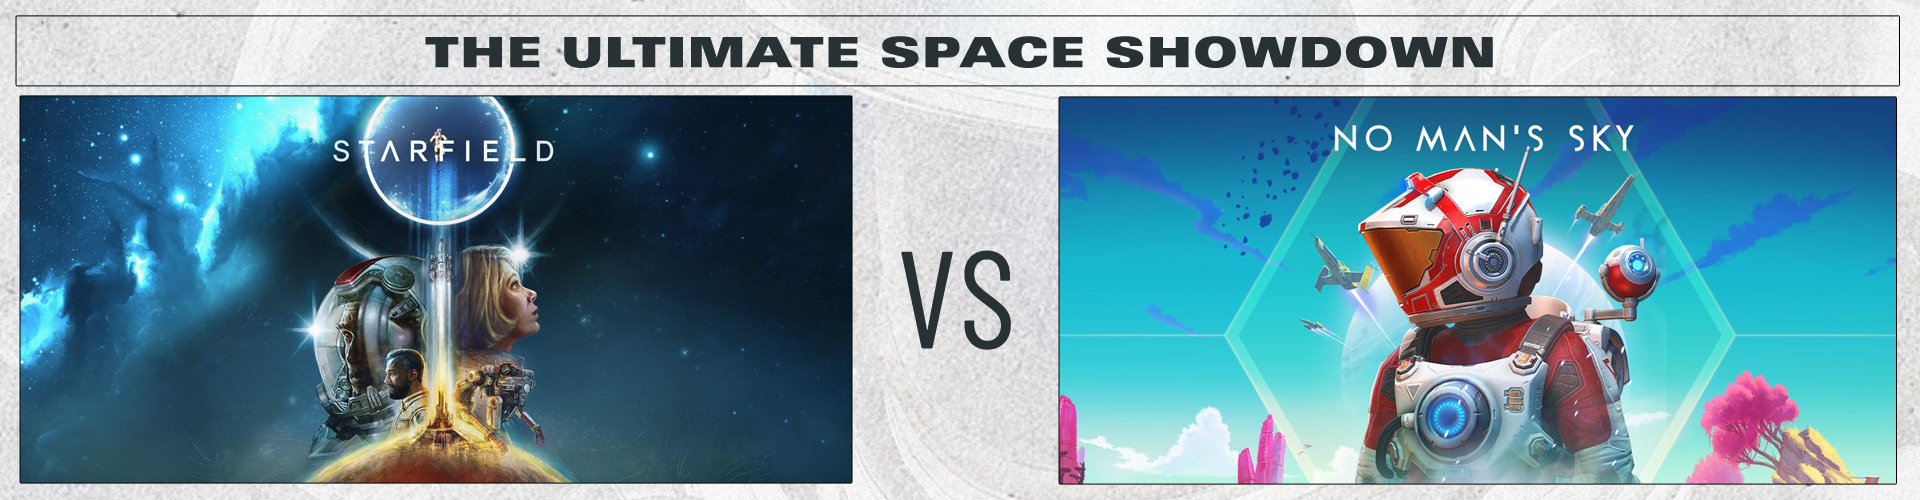 Starfield vs No Man's Sky: Das ultimative Weltraum-Duell